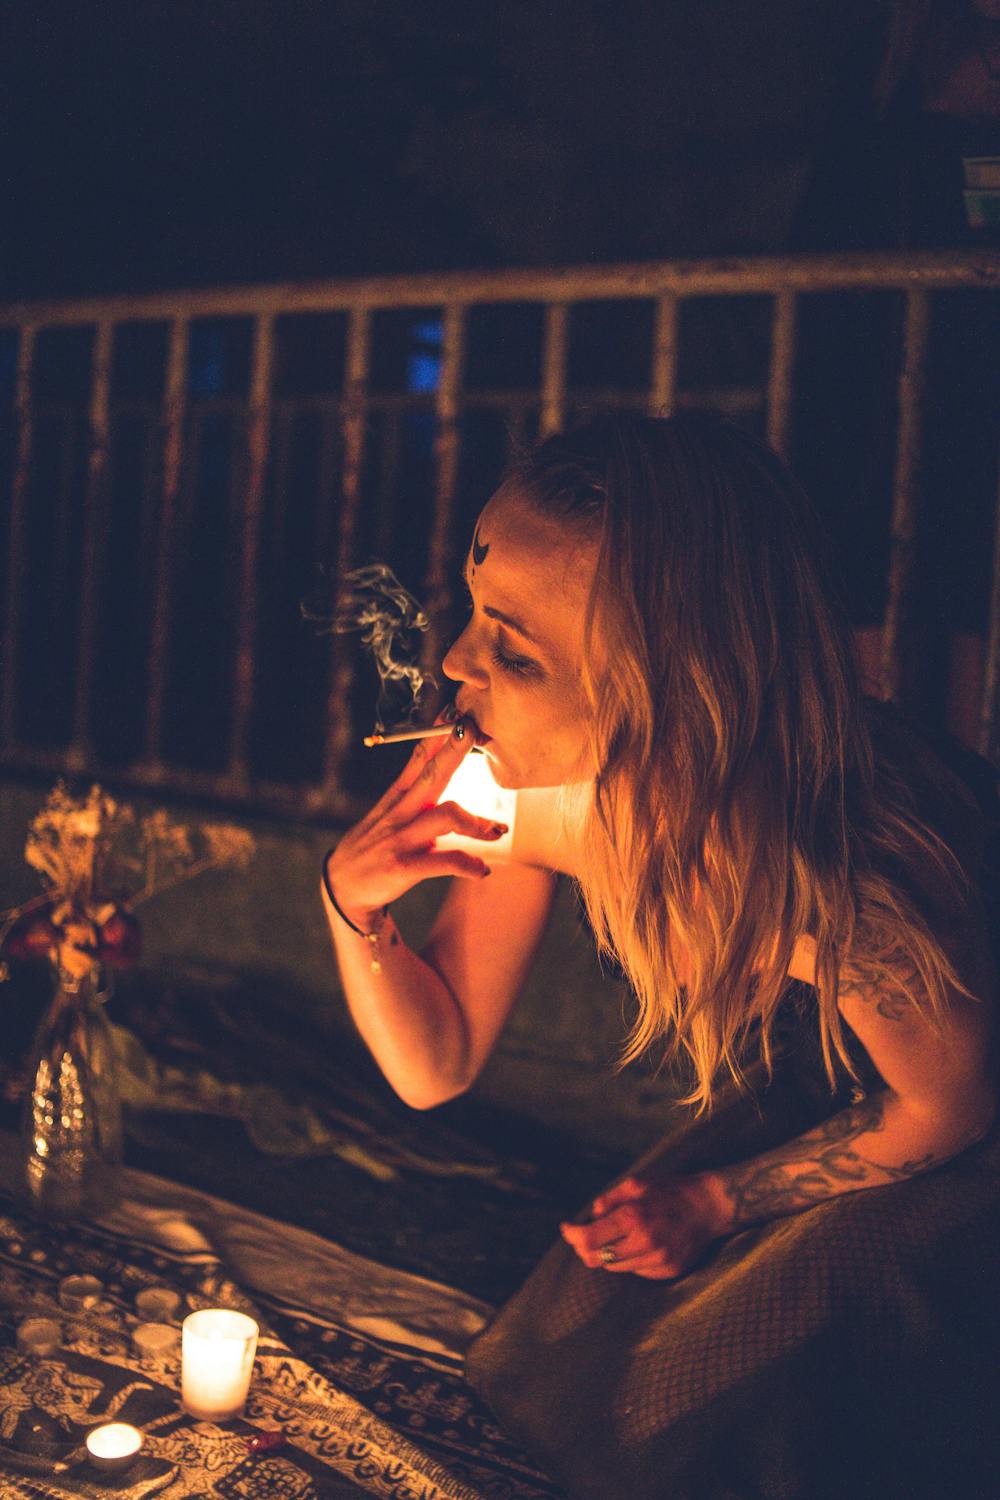 Woman smoking among candles in night · Free Stock Photo